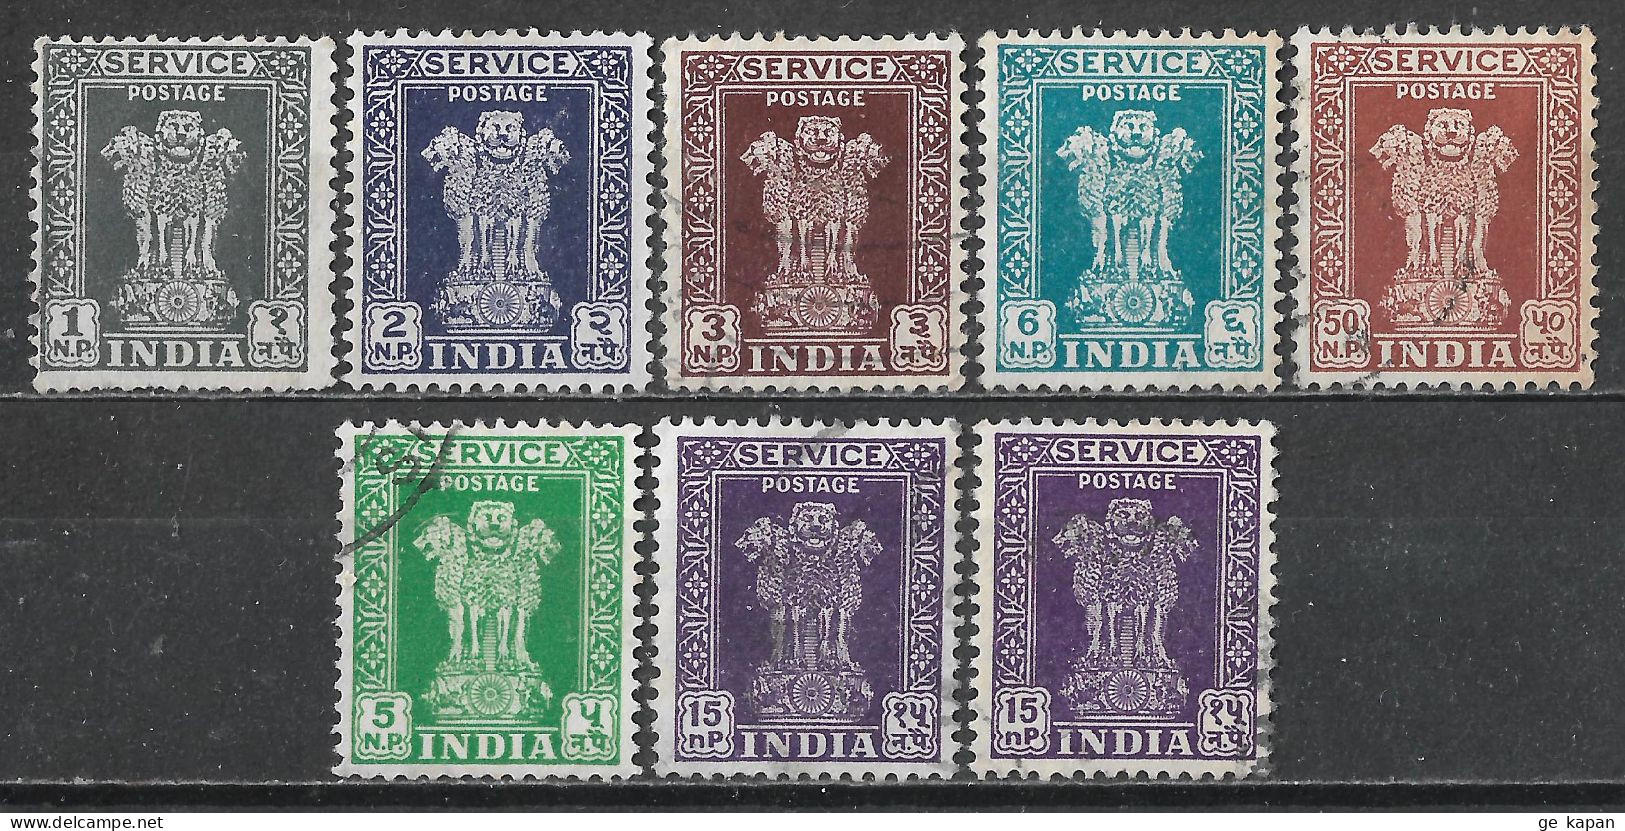 1957,1958 INDIA SET OF 8 OFFICIAL USED STAMPS (Michel # 131-133,135,140,144,148) - Dienstzegels